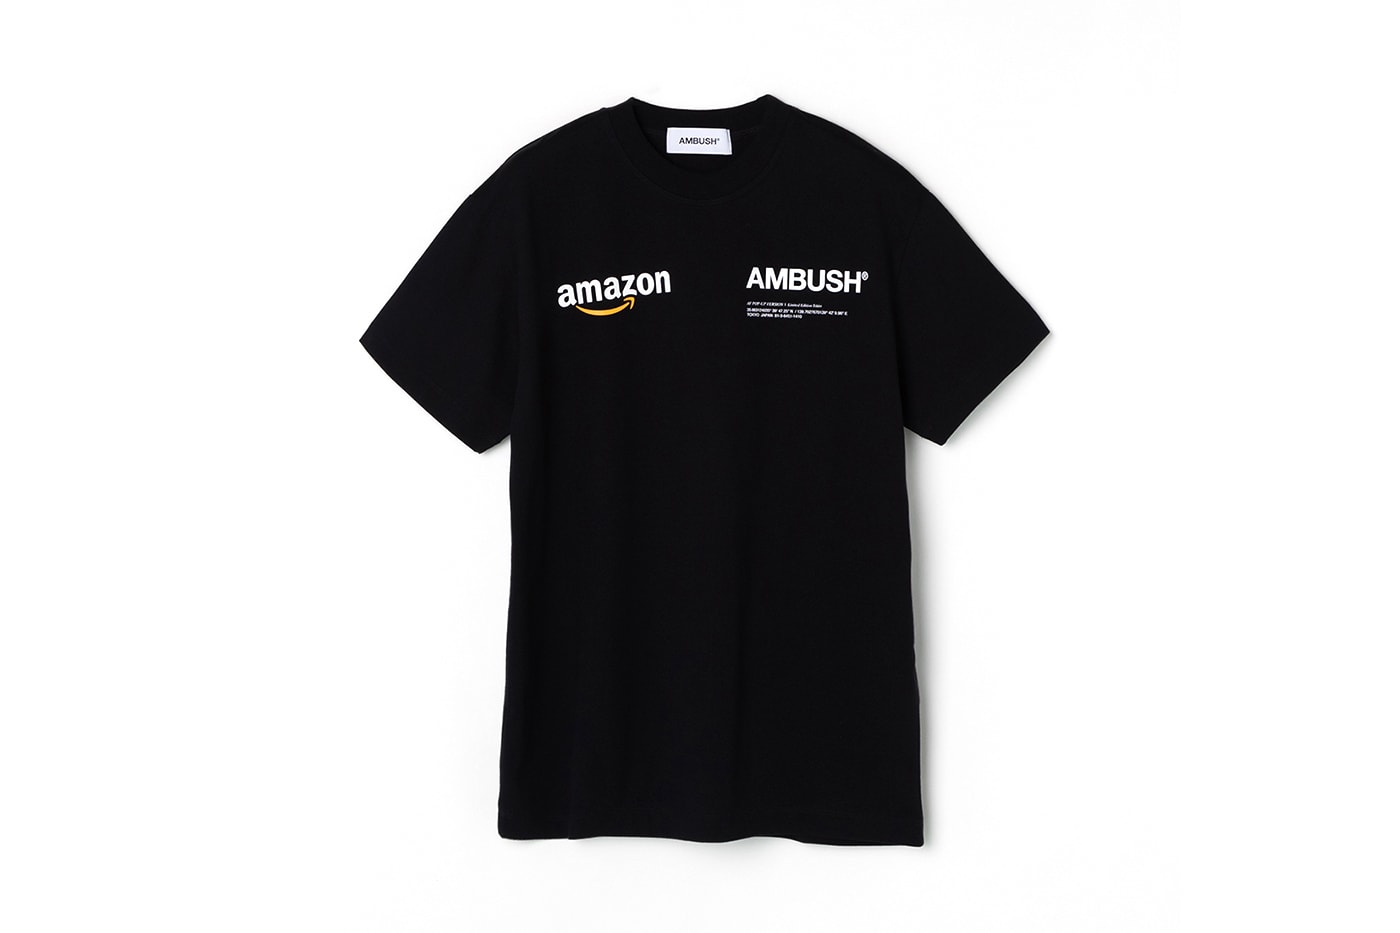 Amazon Fashion AMBUSH® Workshop Tokyo Pop Up Yoon Verbal short long sleeve T shirt Hoodie Alexa